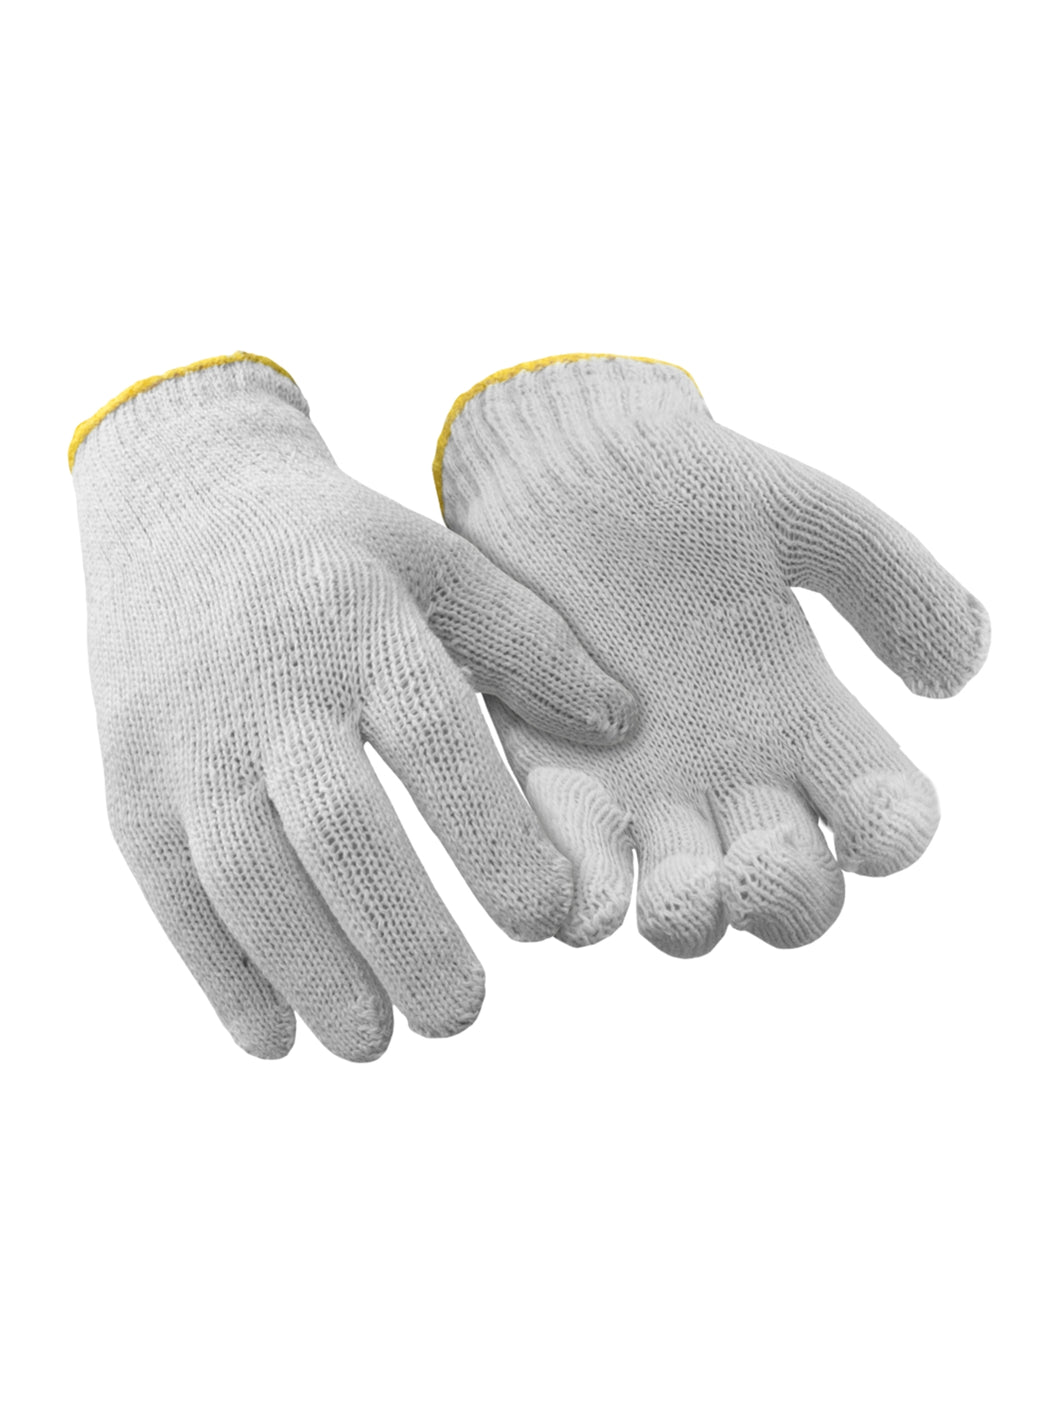 Midweight String Glove Liner